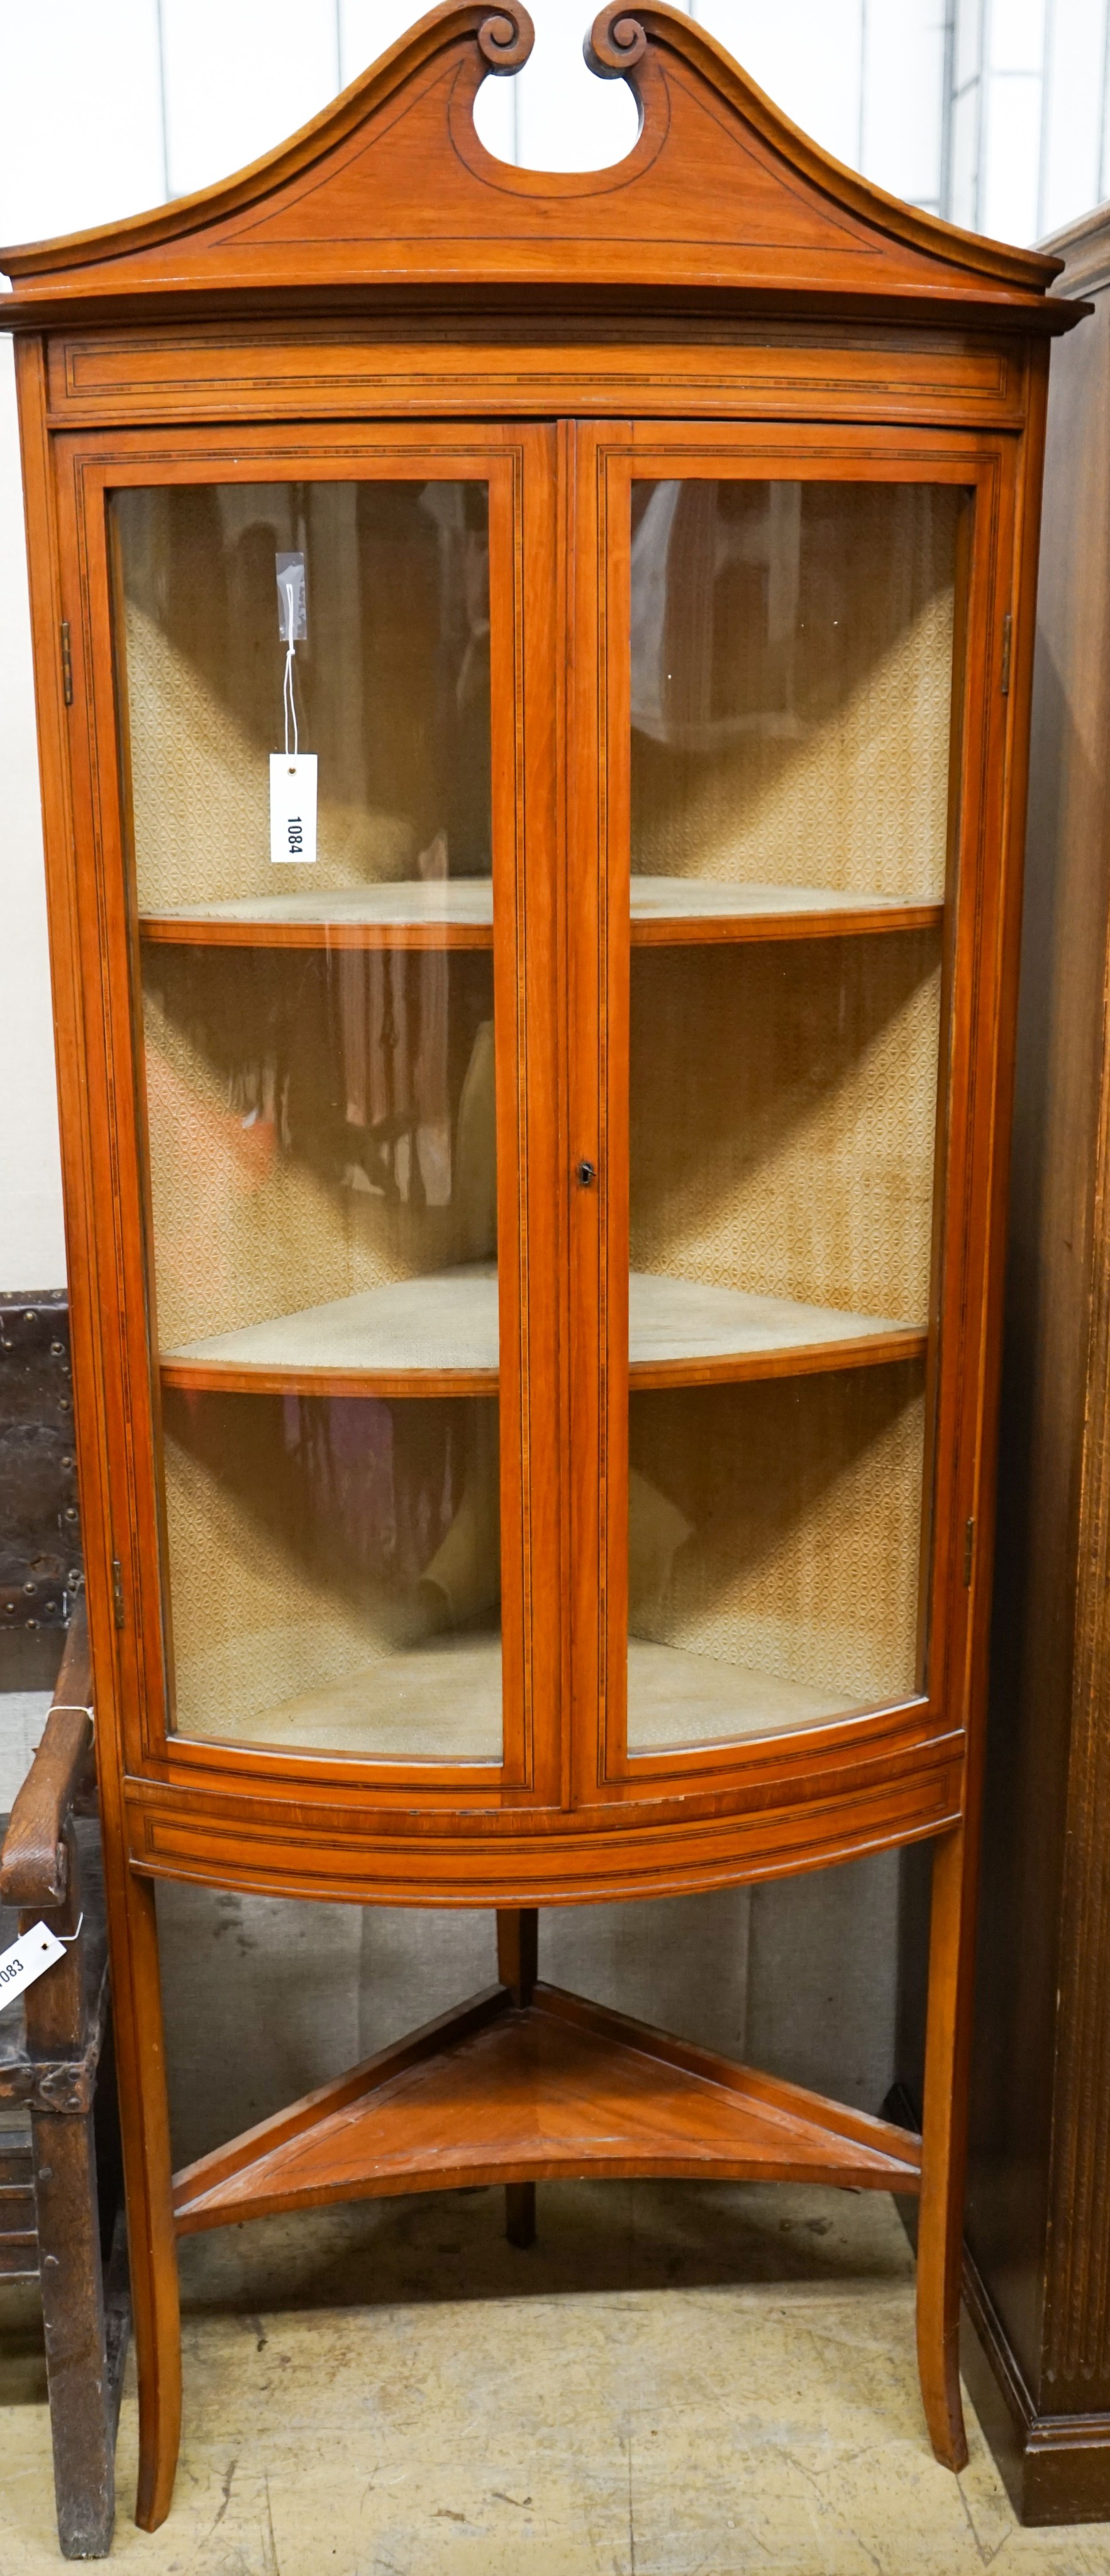 An Edwardian banded satinwood bowfront standing corner cabinet, width 76cm, depth 41cm, height 190cm